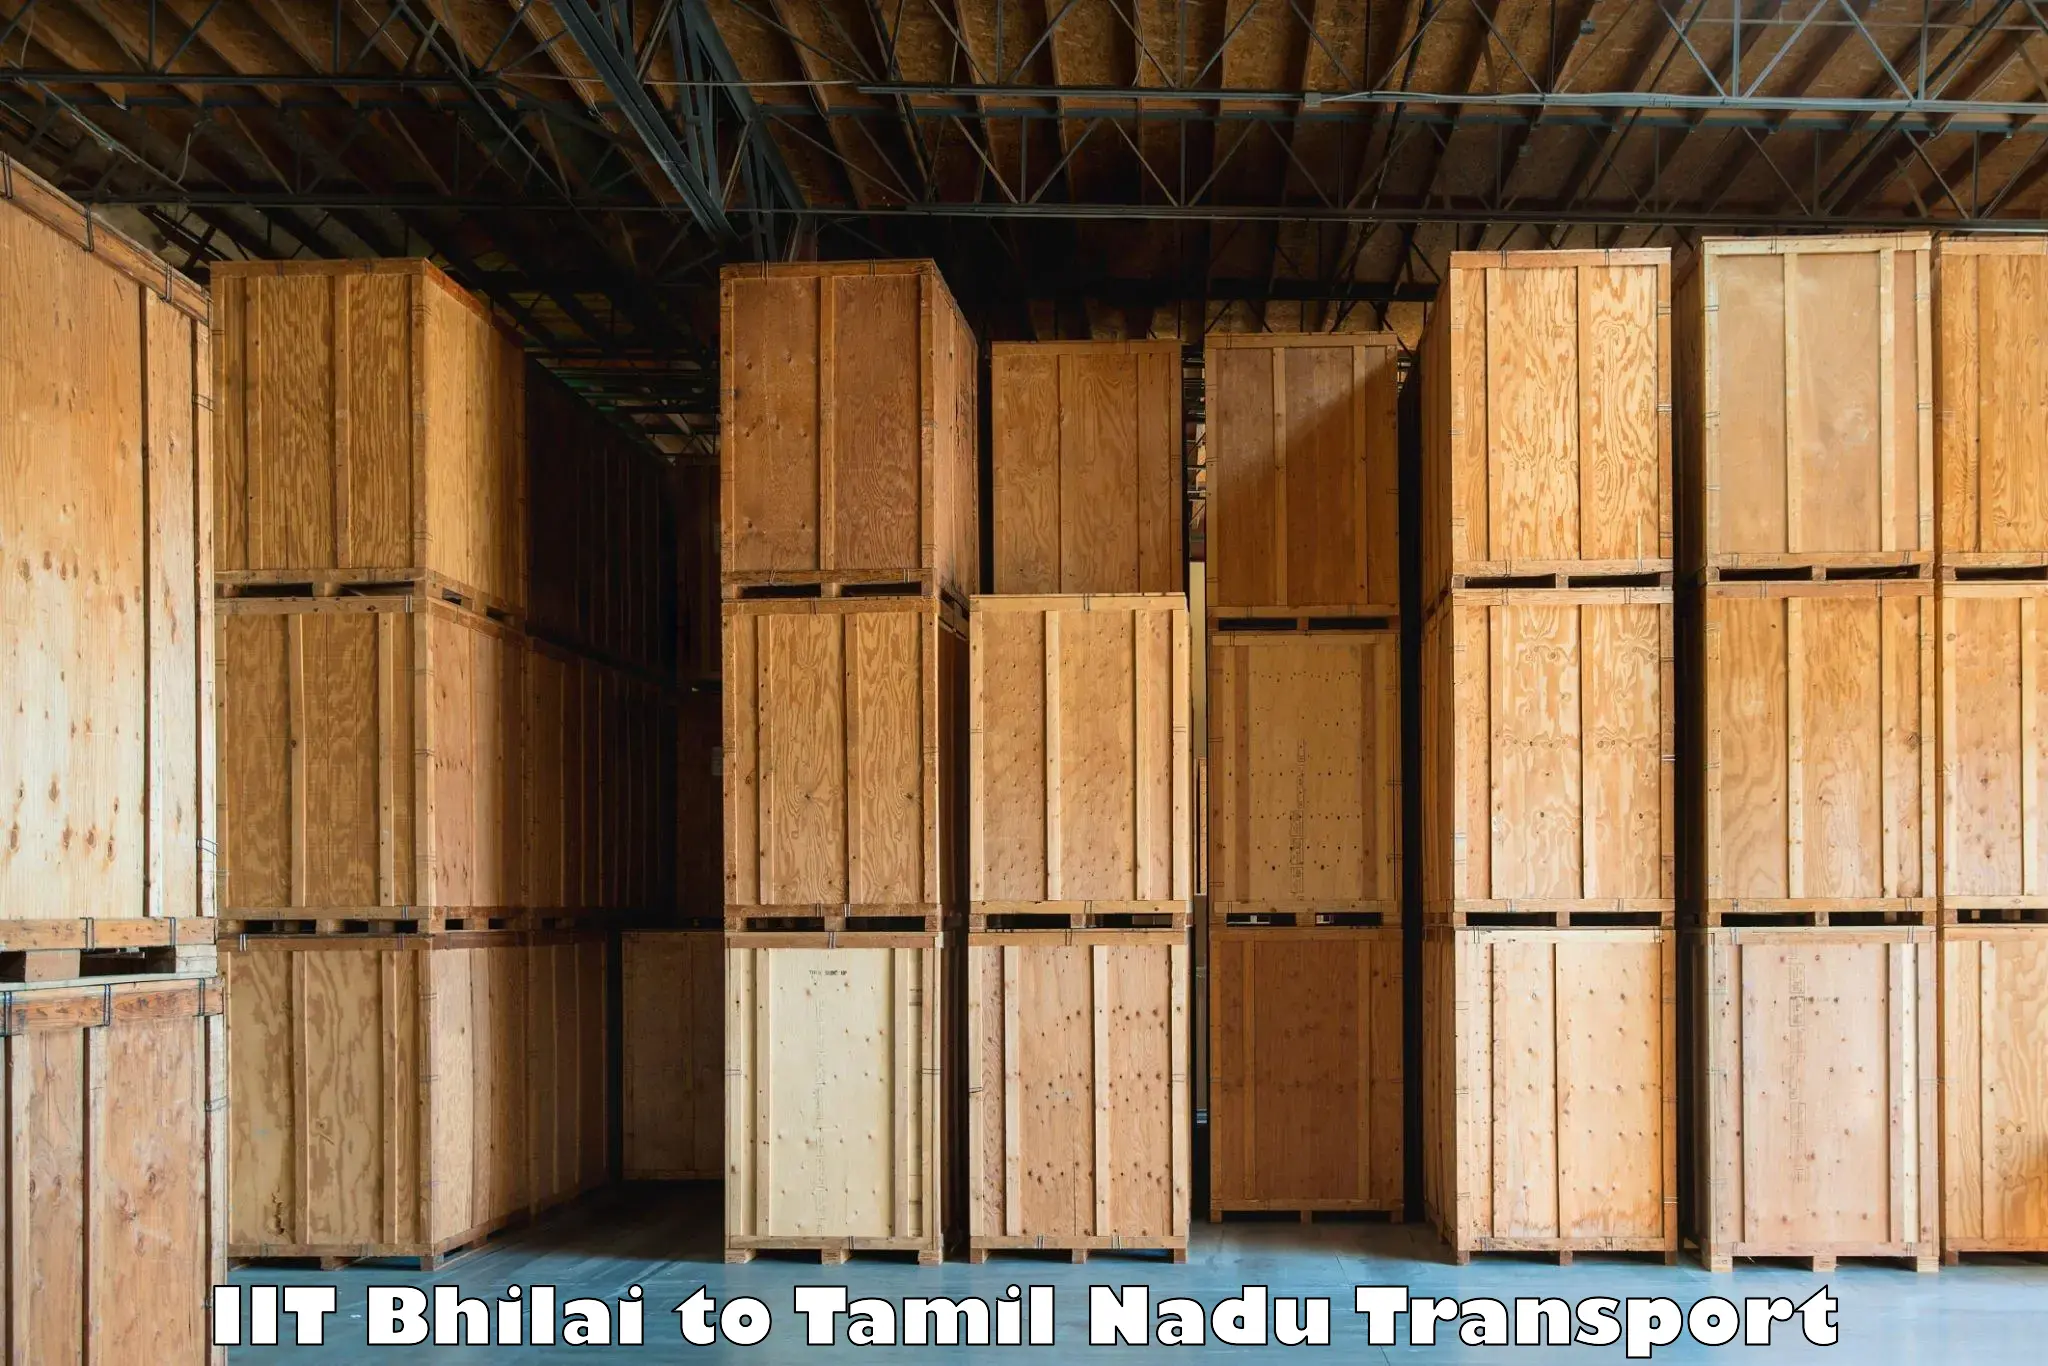 Transport in sharing IIT Bhilai to Tamil Nadu